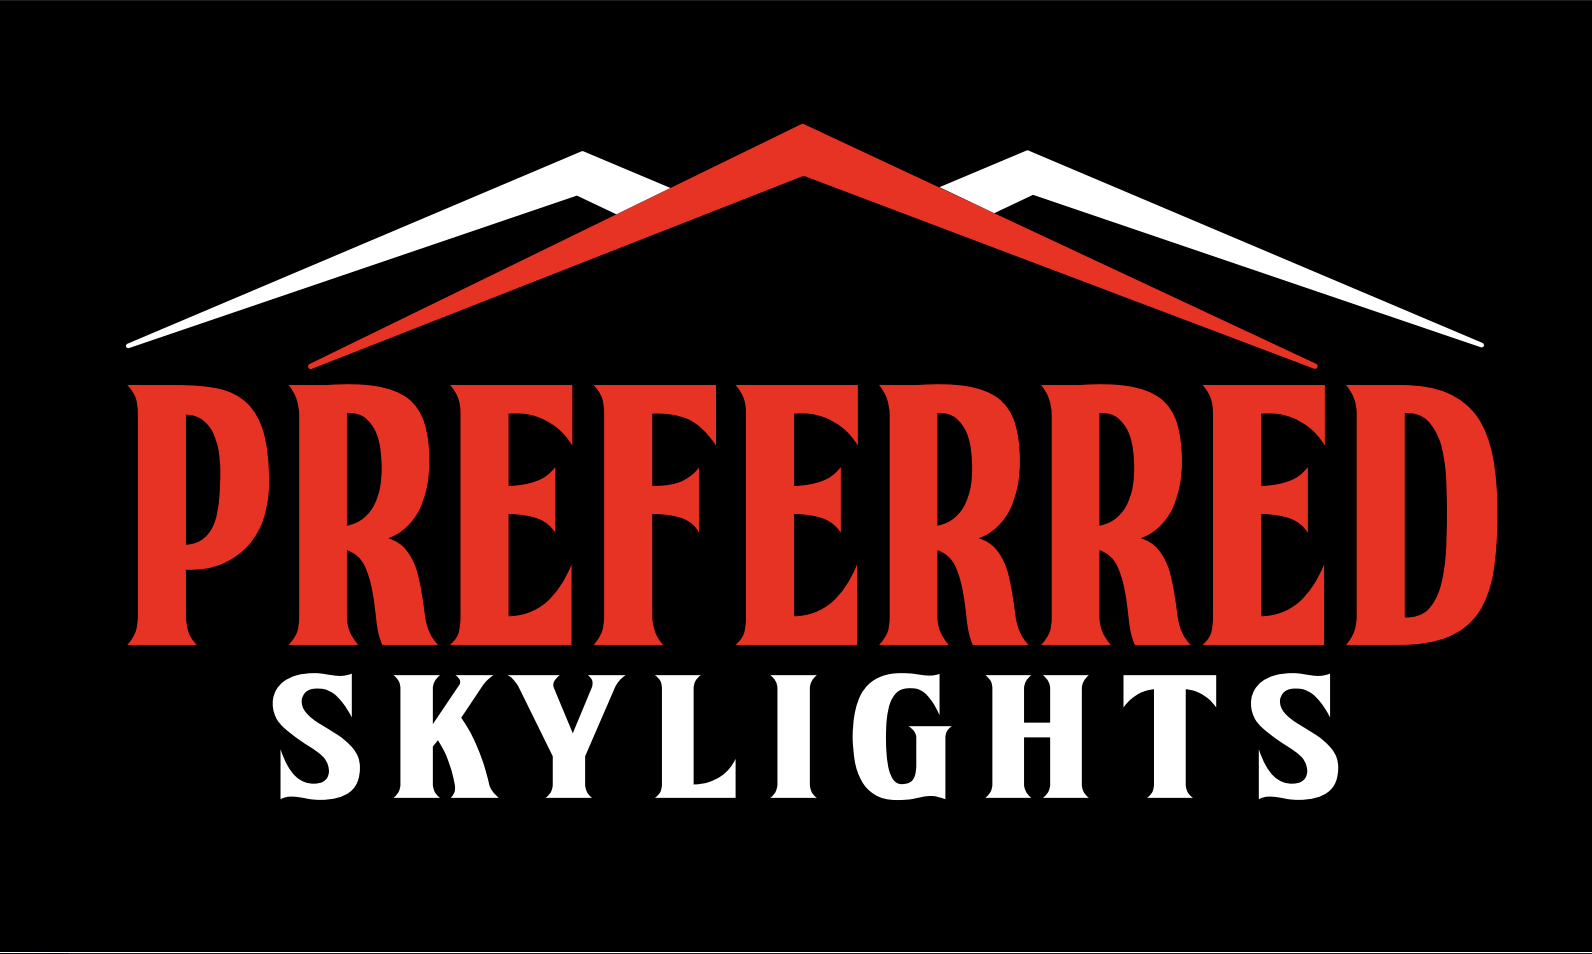 Preferred Skylights logo